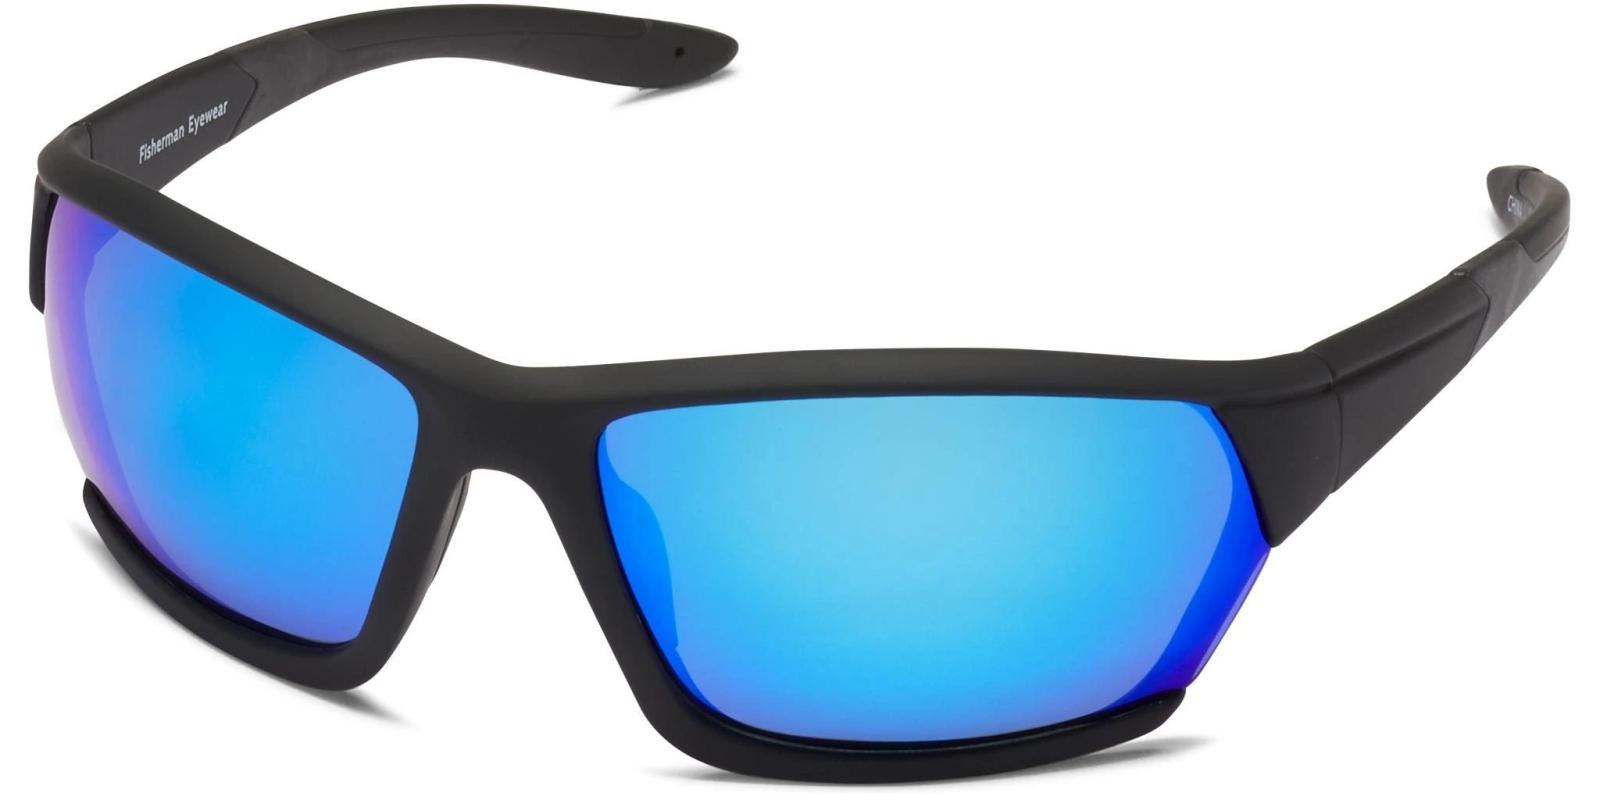 icu Eyewear Breeze Sunglasses